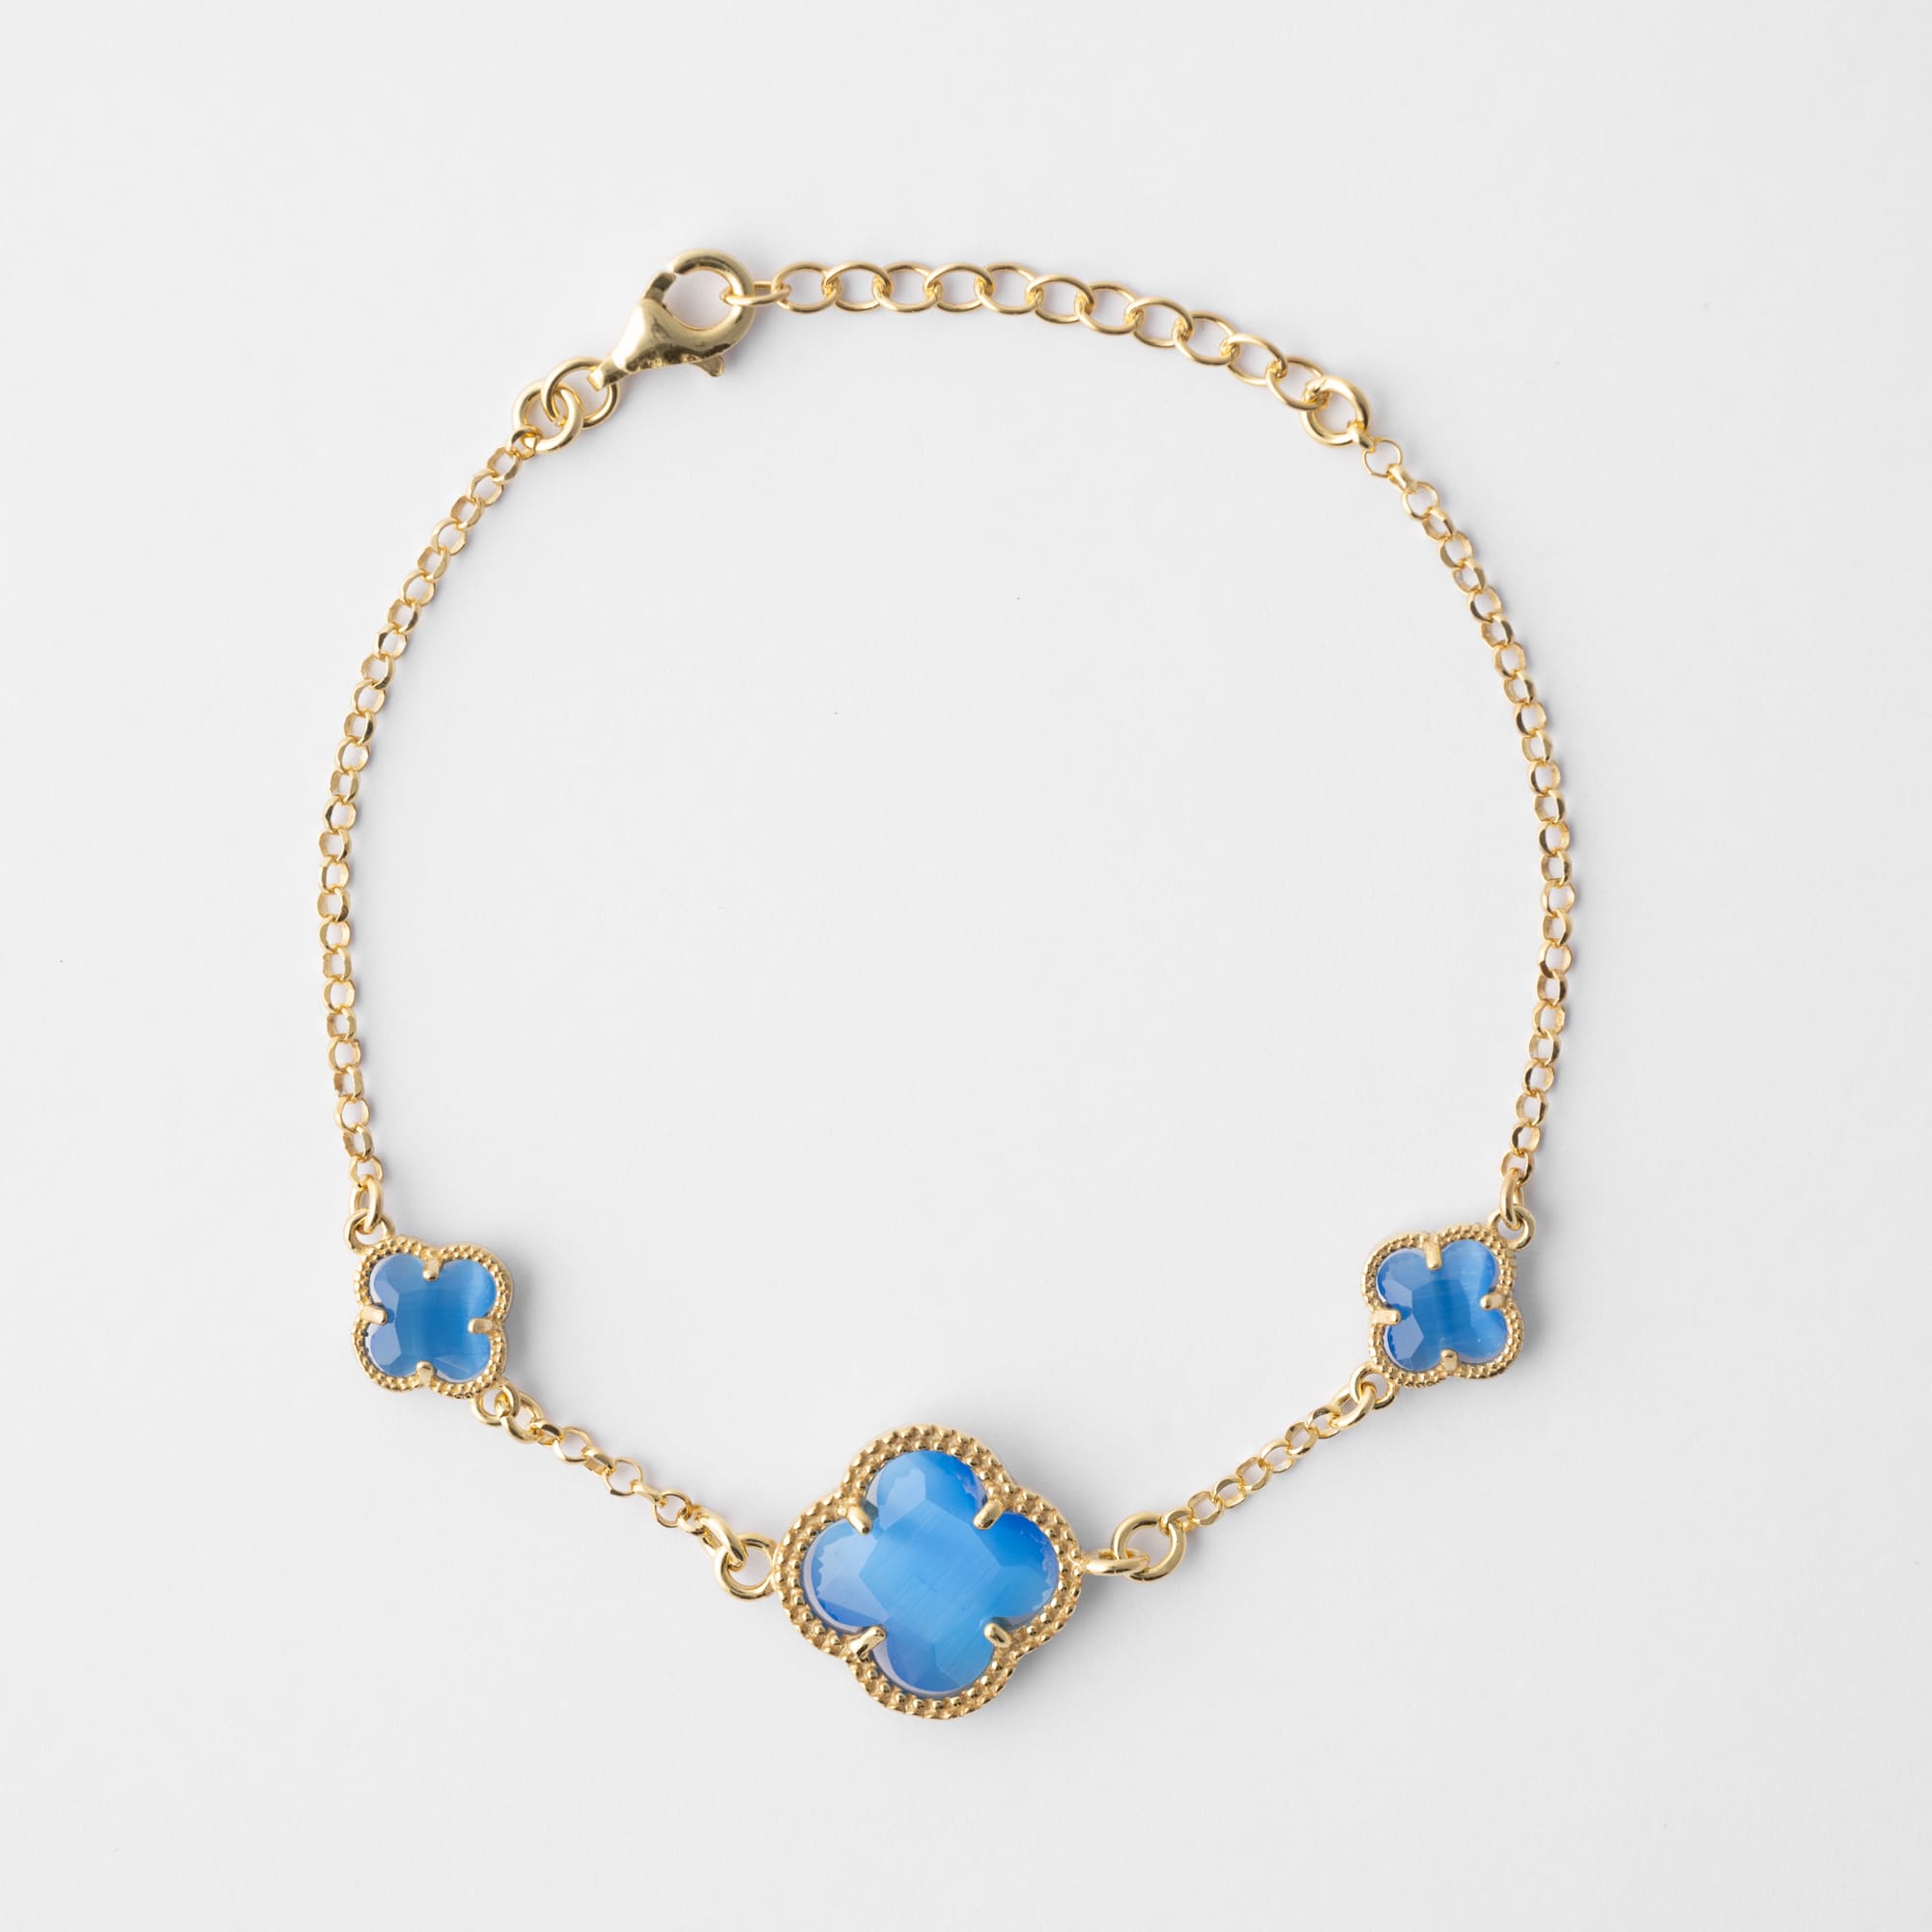 CLOVERLEAF gold bracelet with blu quartz